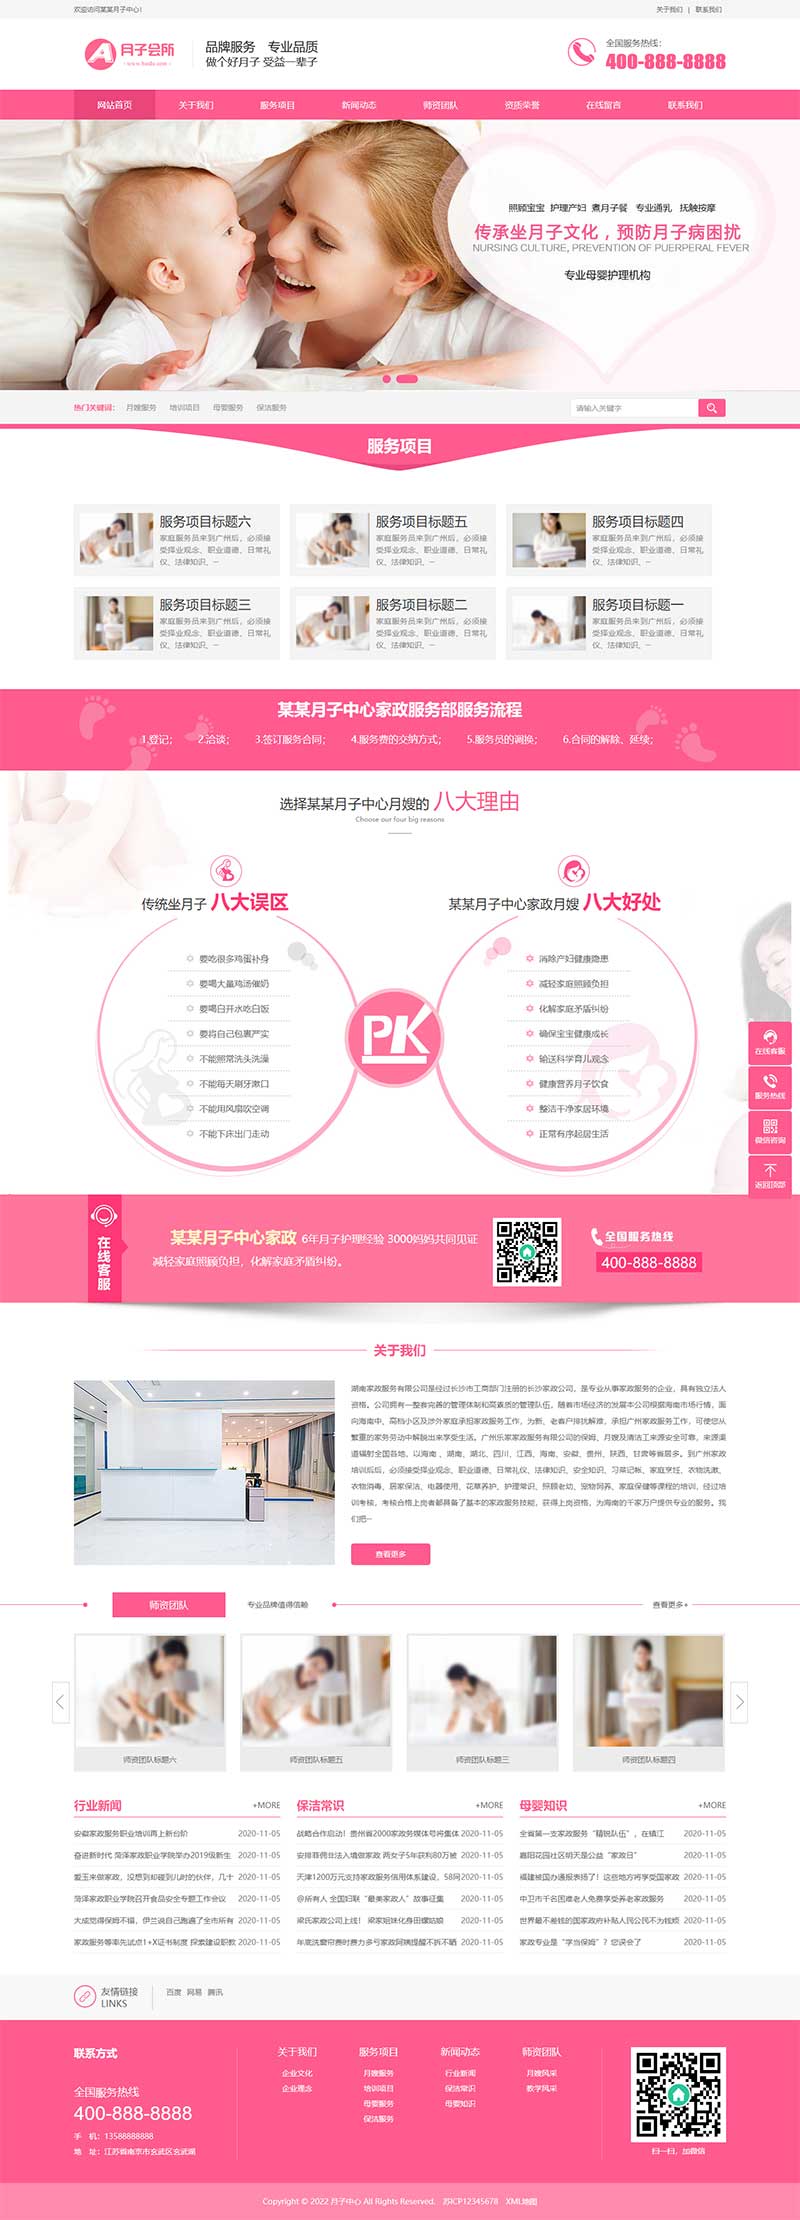 (PC+WAP)粉色月嫂保姆家政服务公司网站电脑端模板展示图片